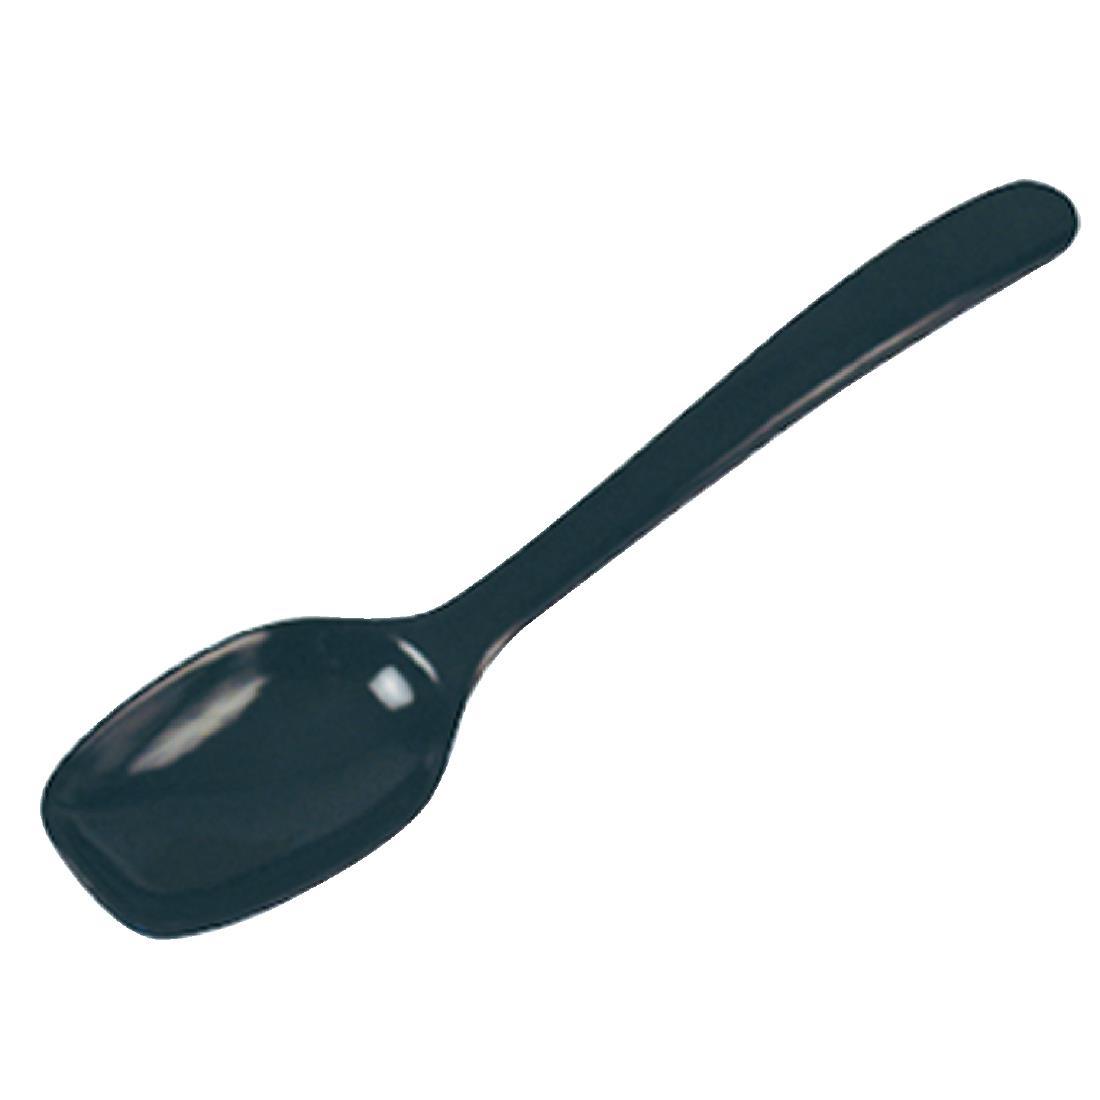 Black Serving Spoon - L296  - 1